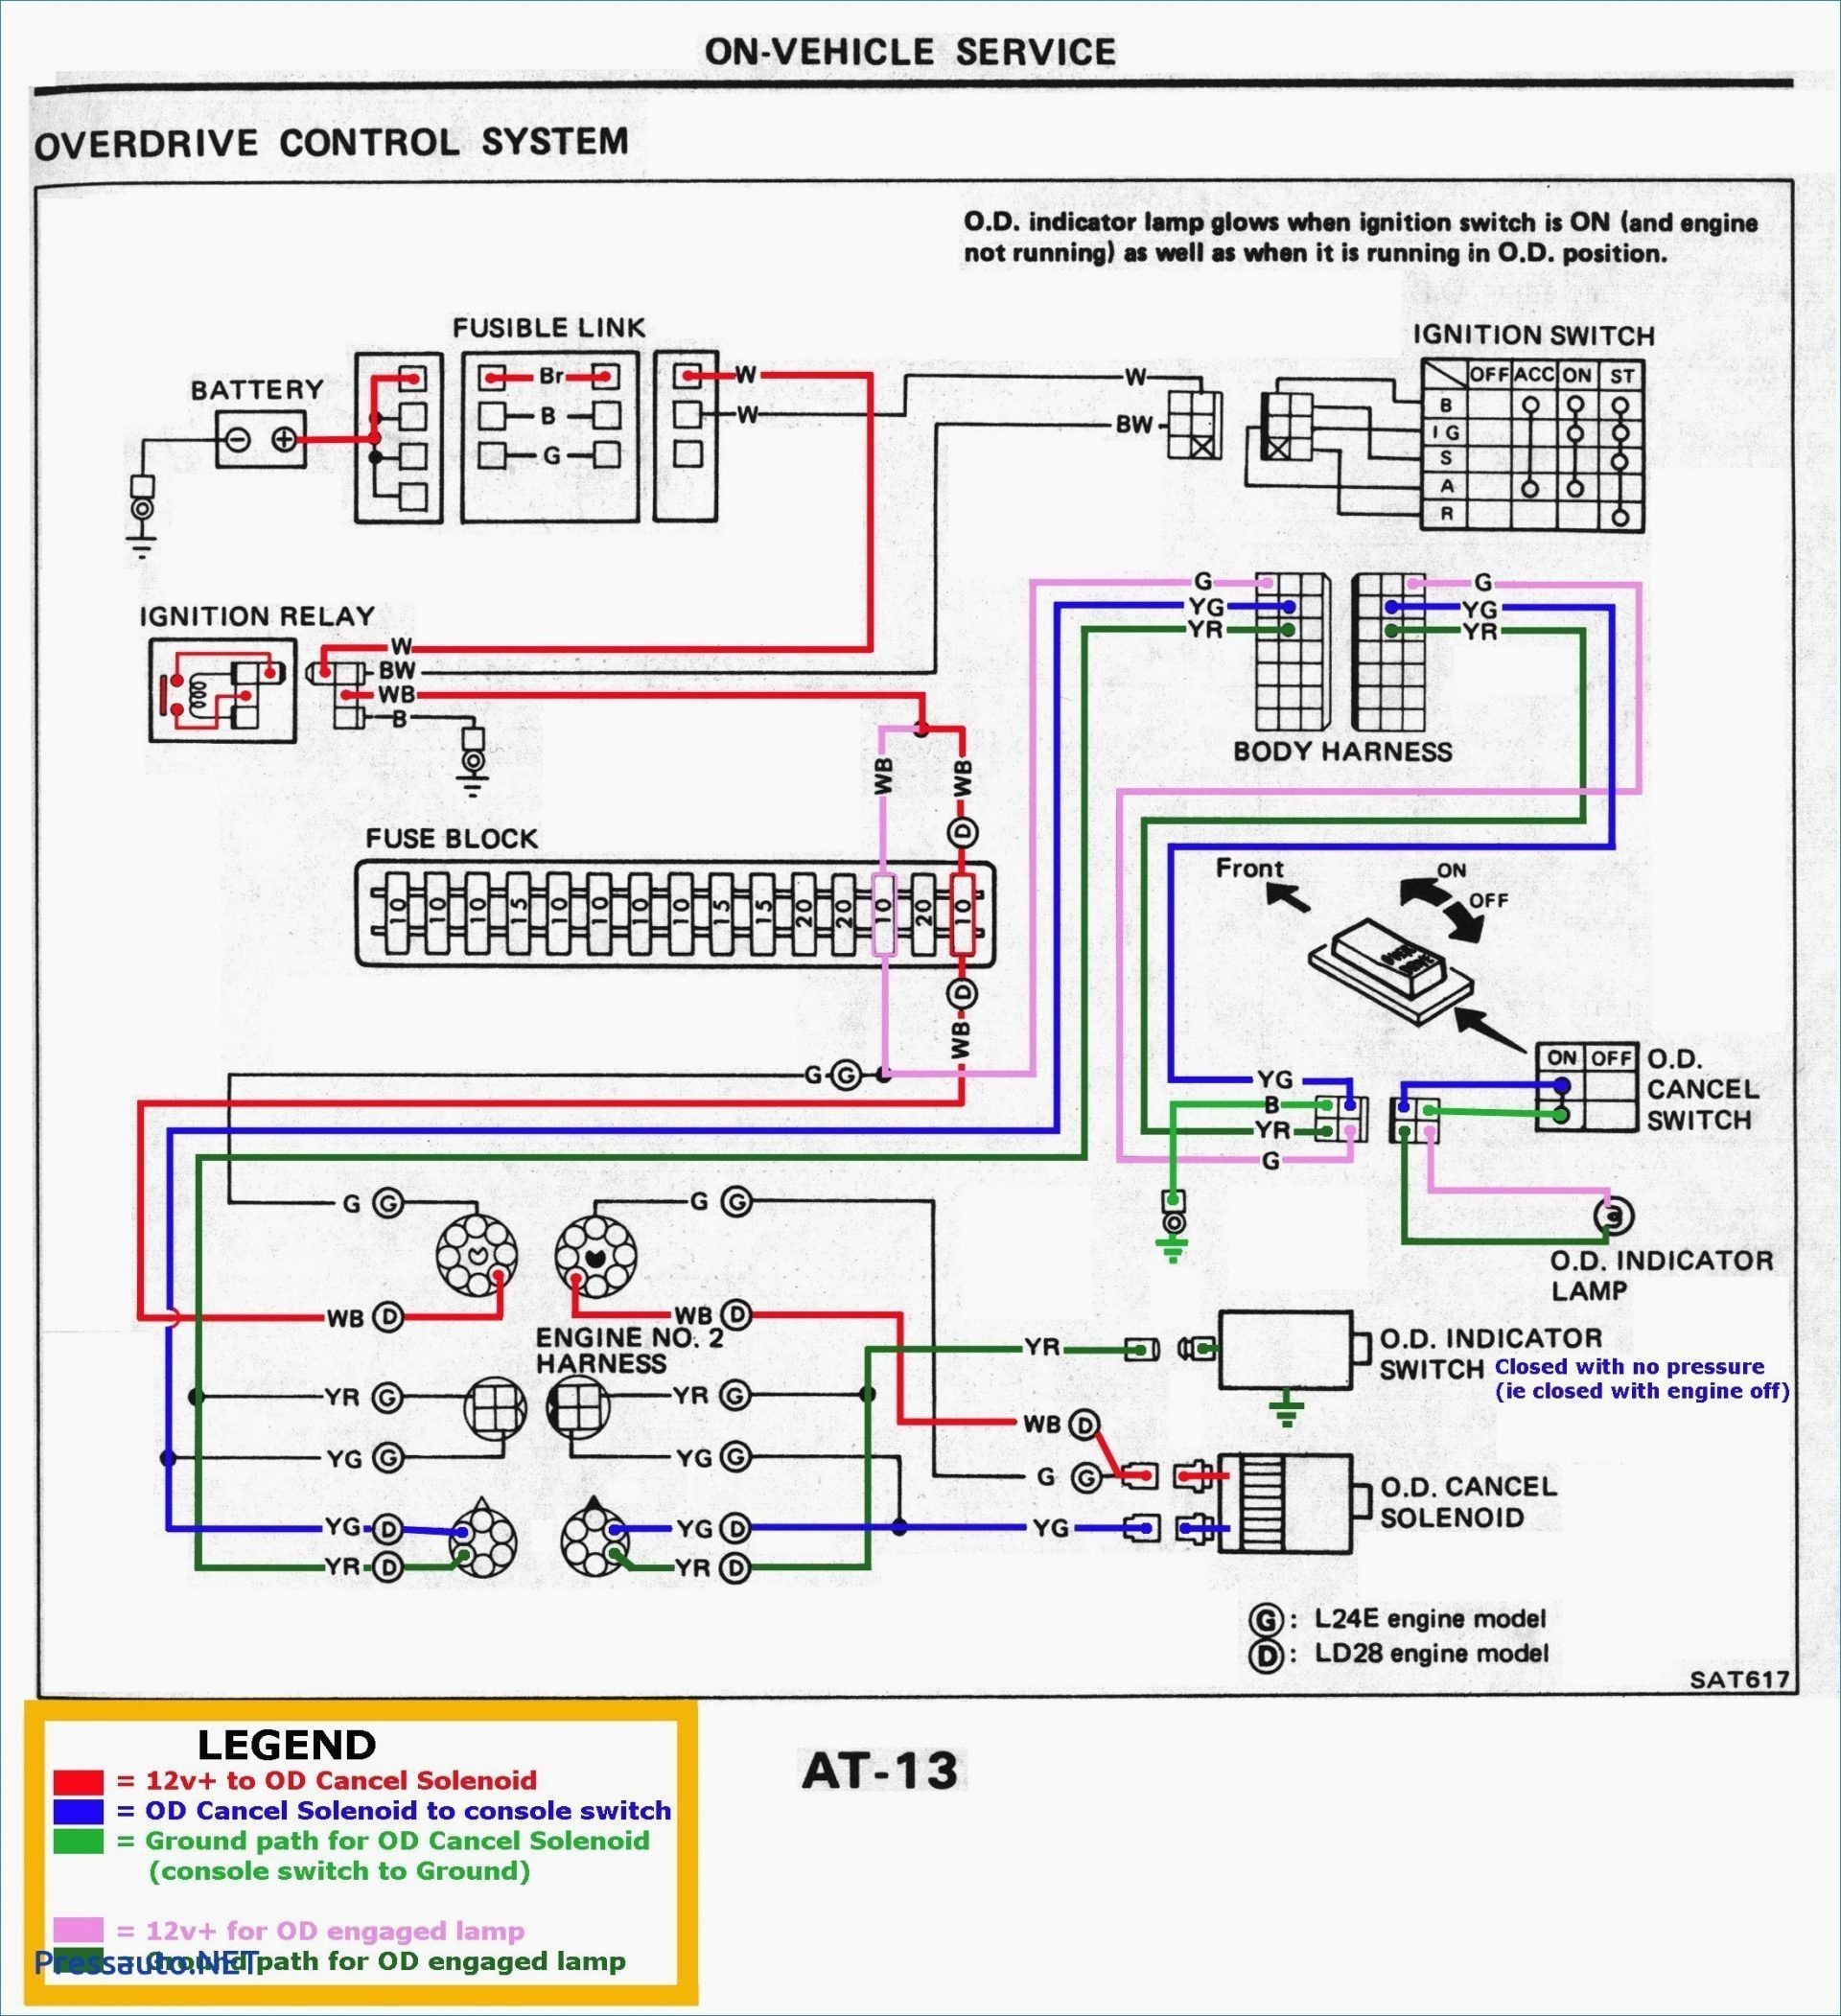 Bulldog Security Wiring Diagrams Wiring Diagram Alarm System Car New Simple Wiring Diagram Alarm Of Bulldog Security Wiring Diagrams